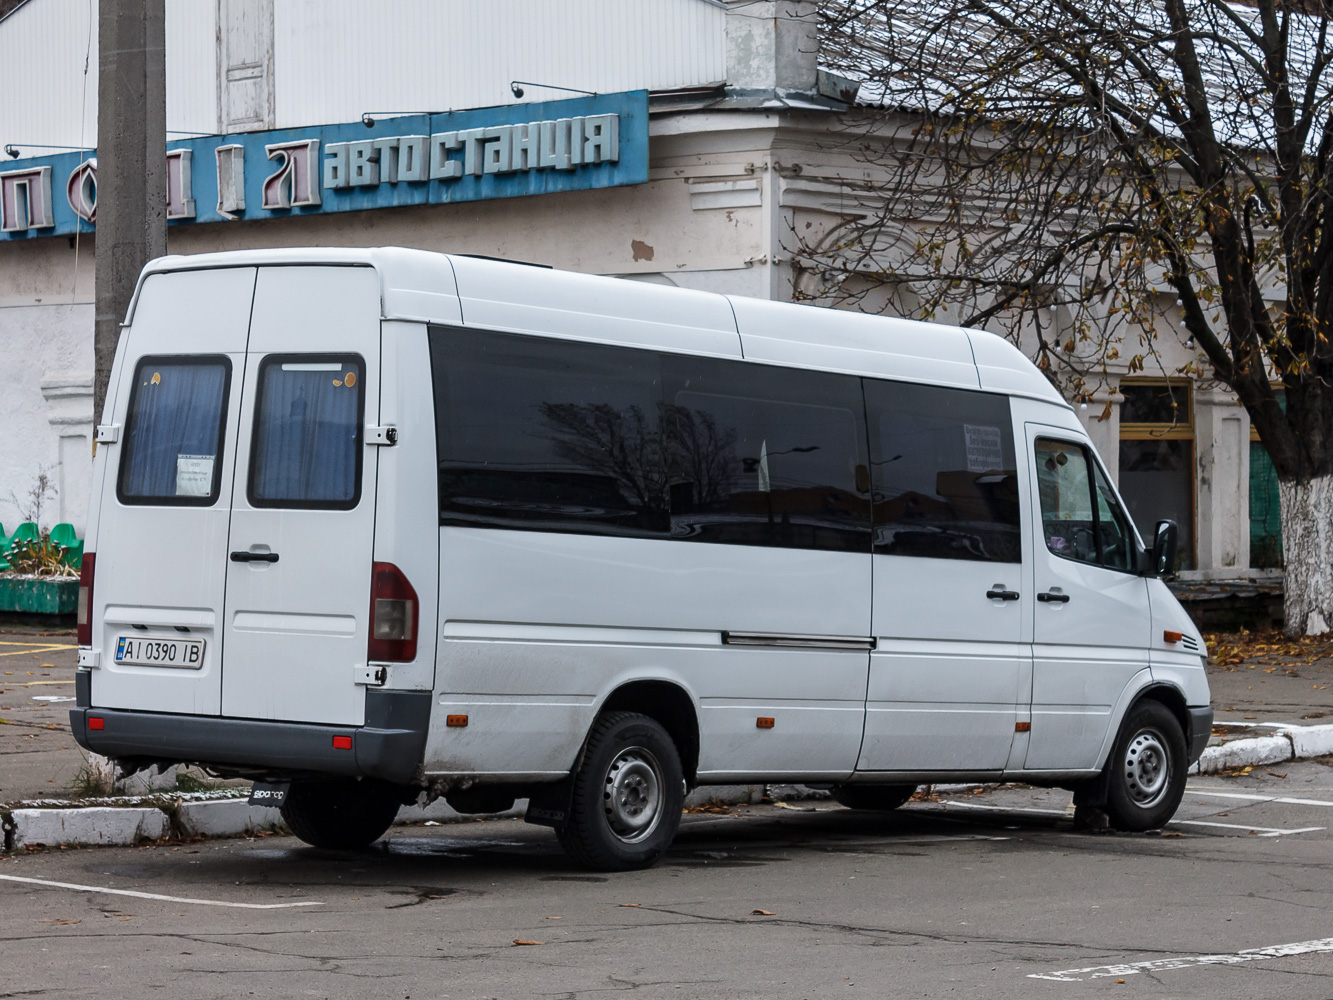 Богуслав, Mercedes-Benz Sprinter 316CDI # АІ 0390 ІВ